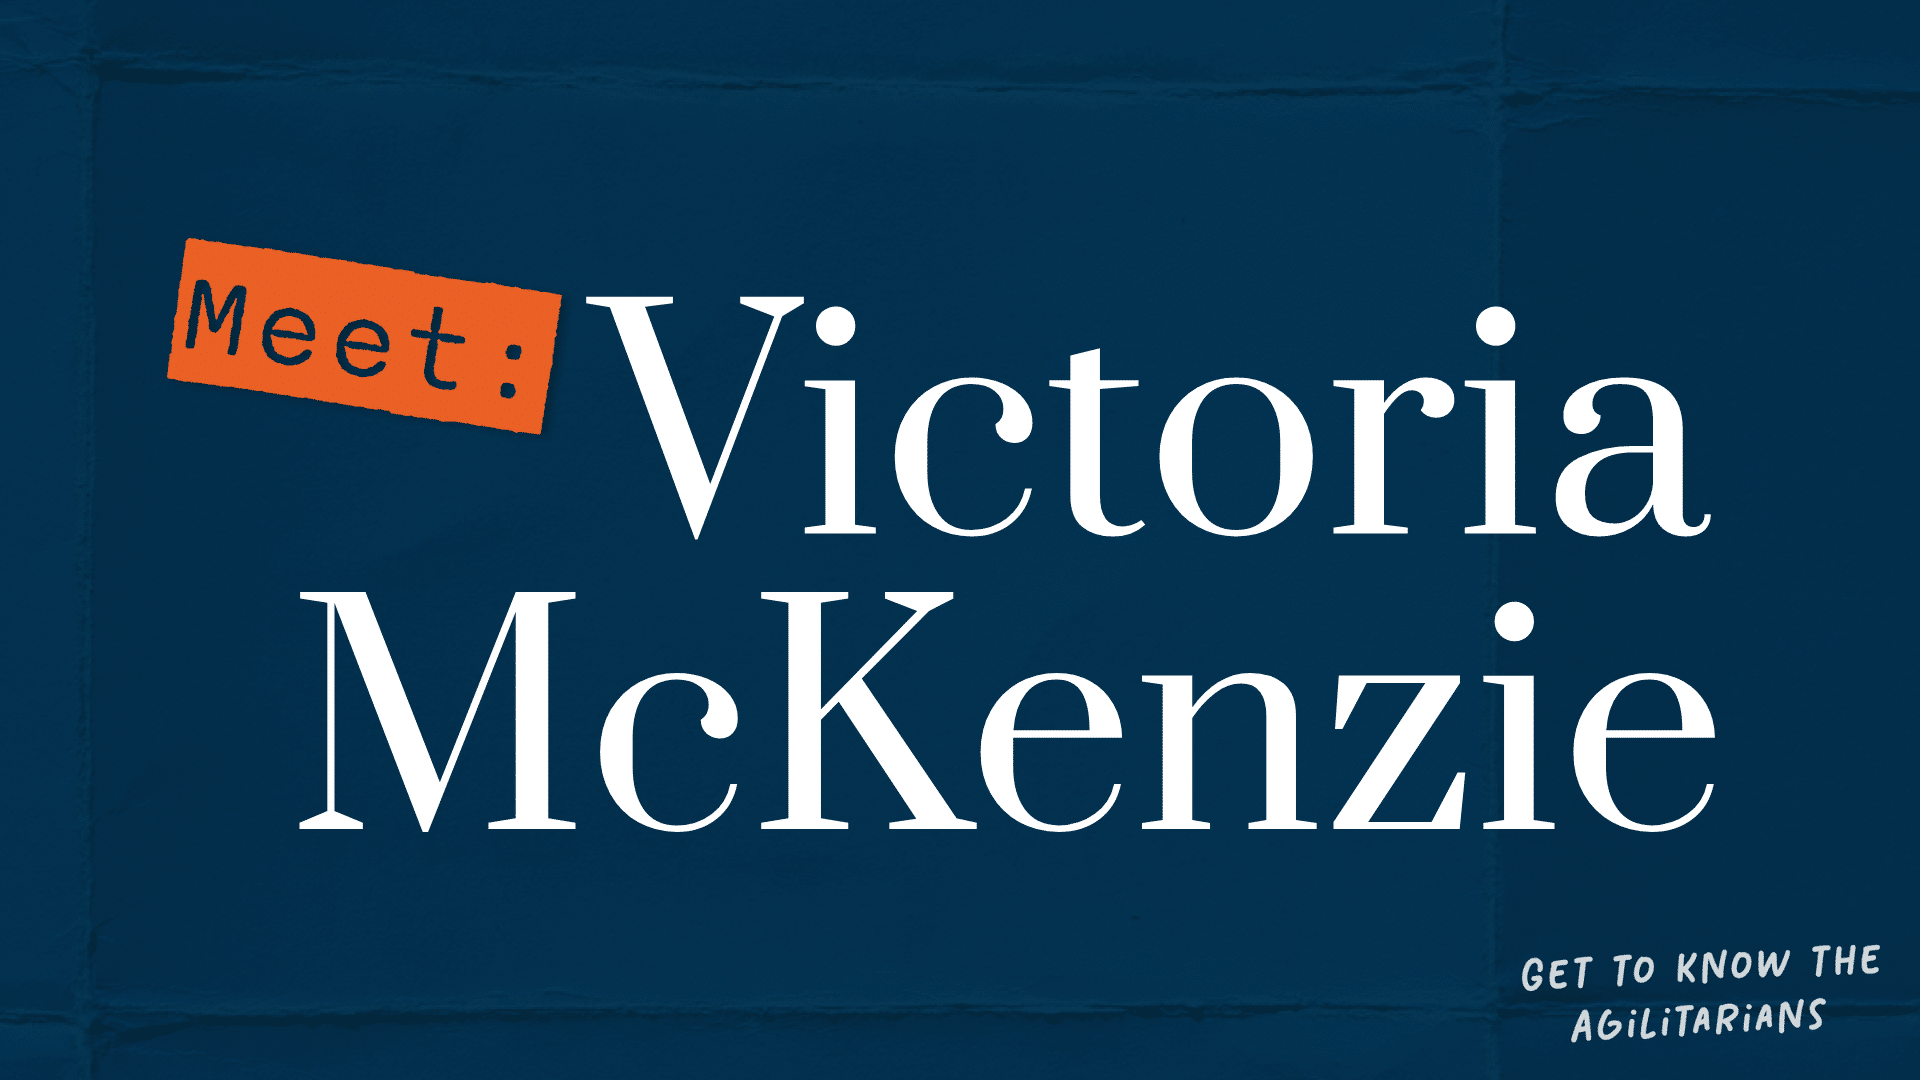 Get to know the Agilitarians: Meet Victoria McKenzie